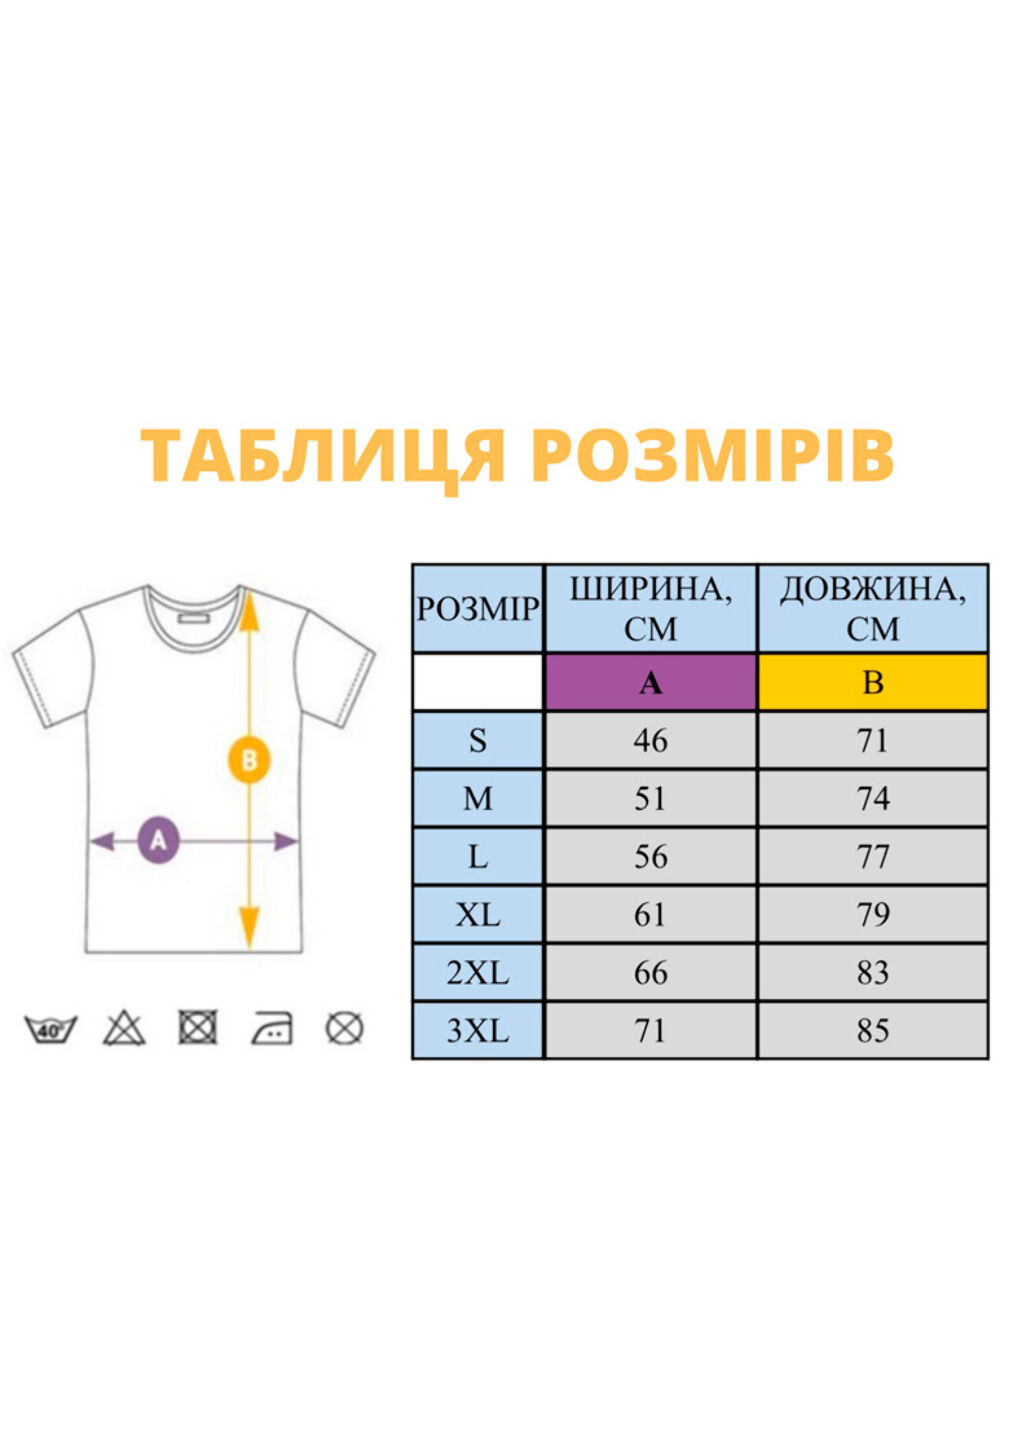 Хаки (оливковая) футболка з вишивкою fight like ukranians 01-1 мужская хаки 3xl No Brand